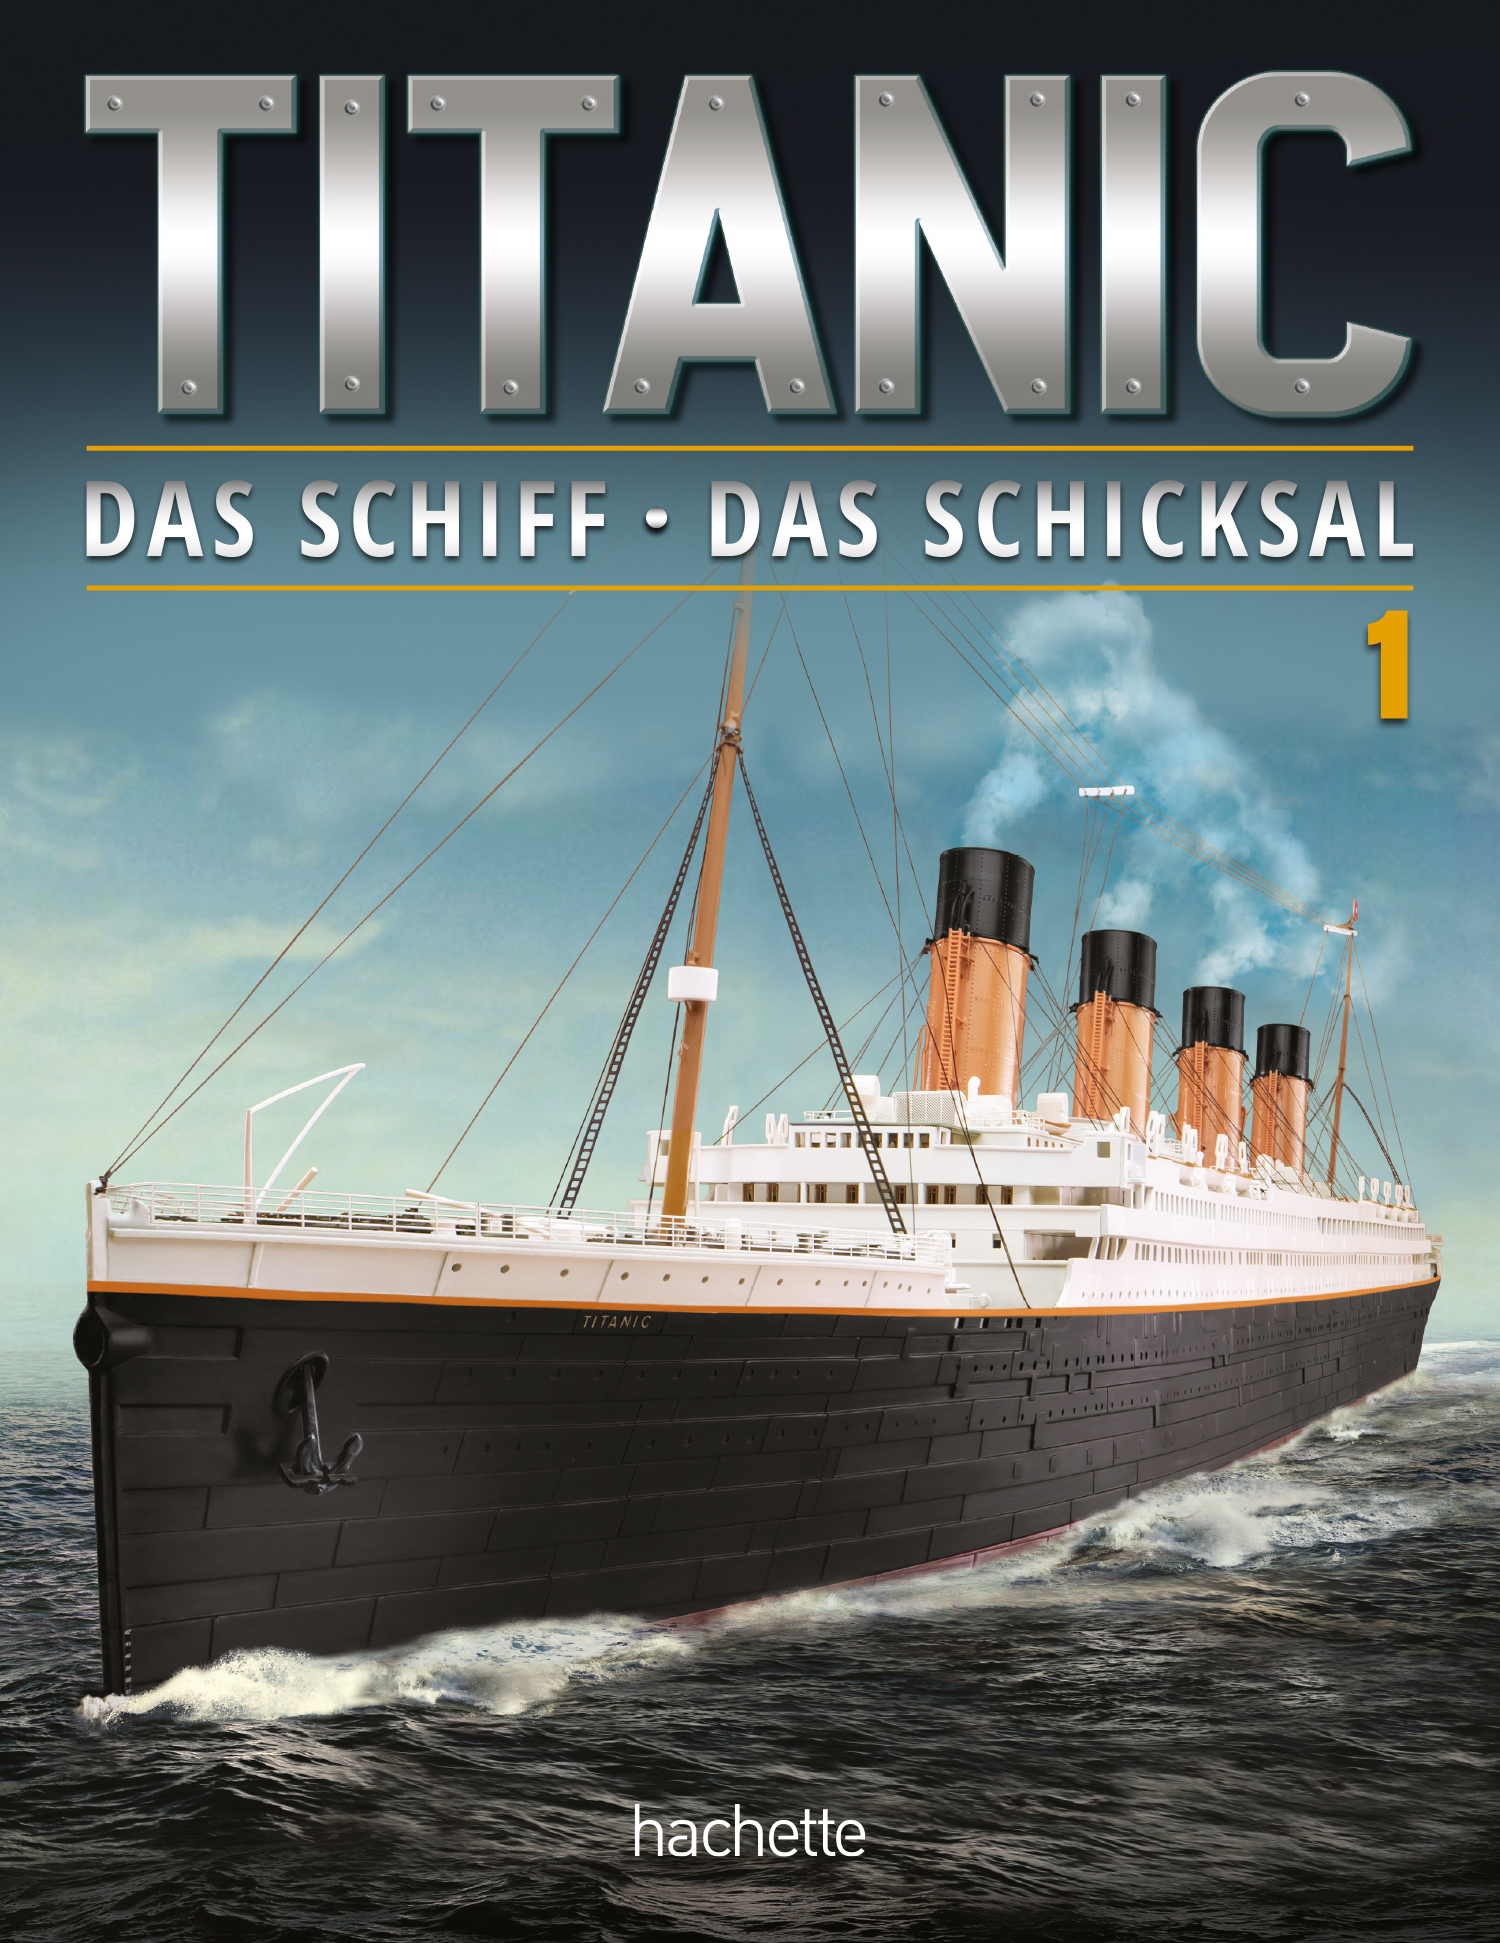 Titanic - Ausgabe 001